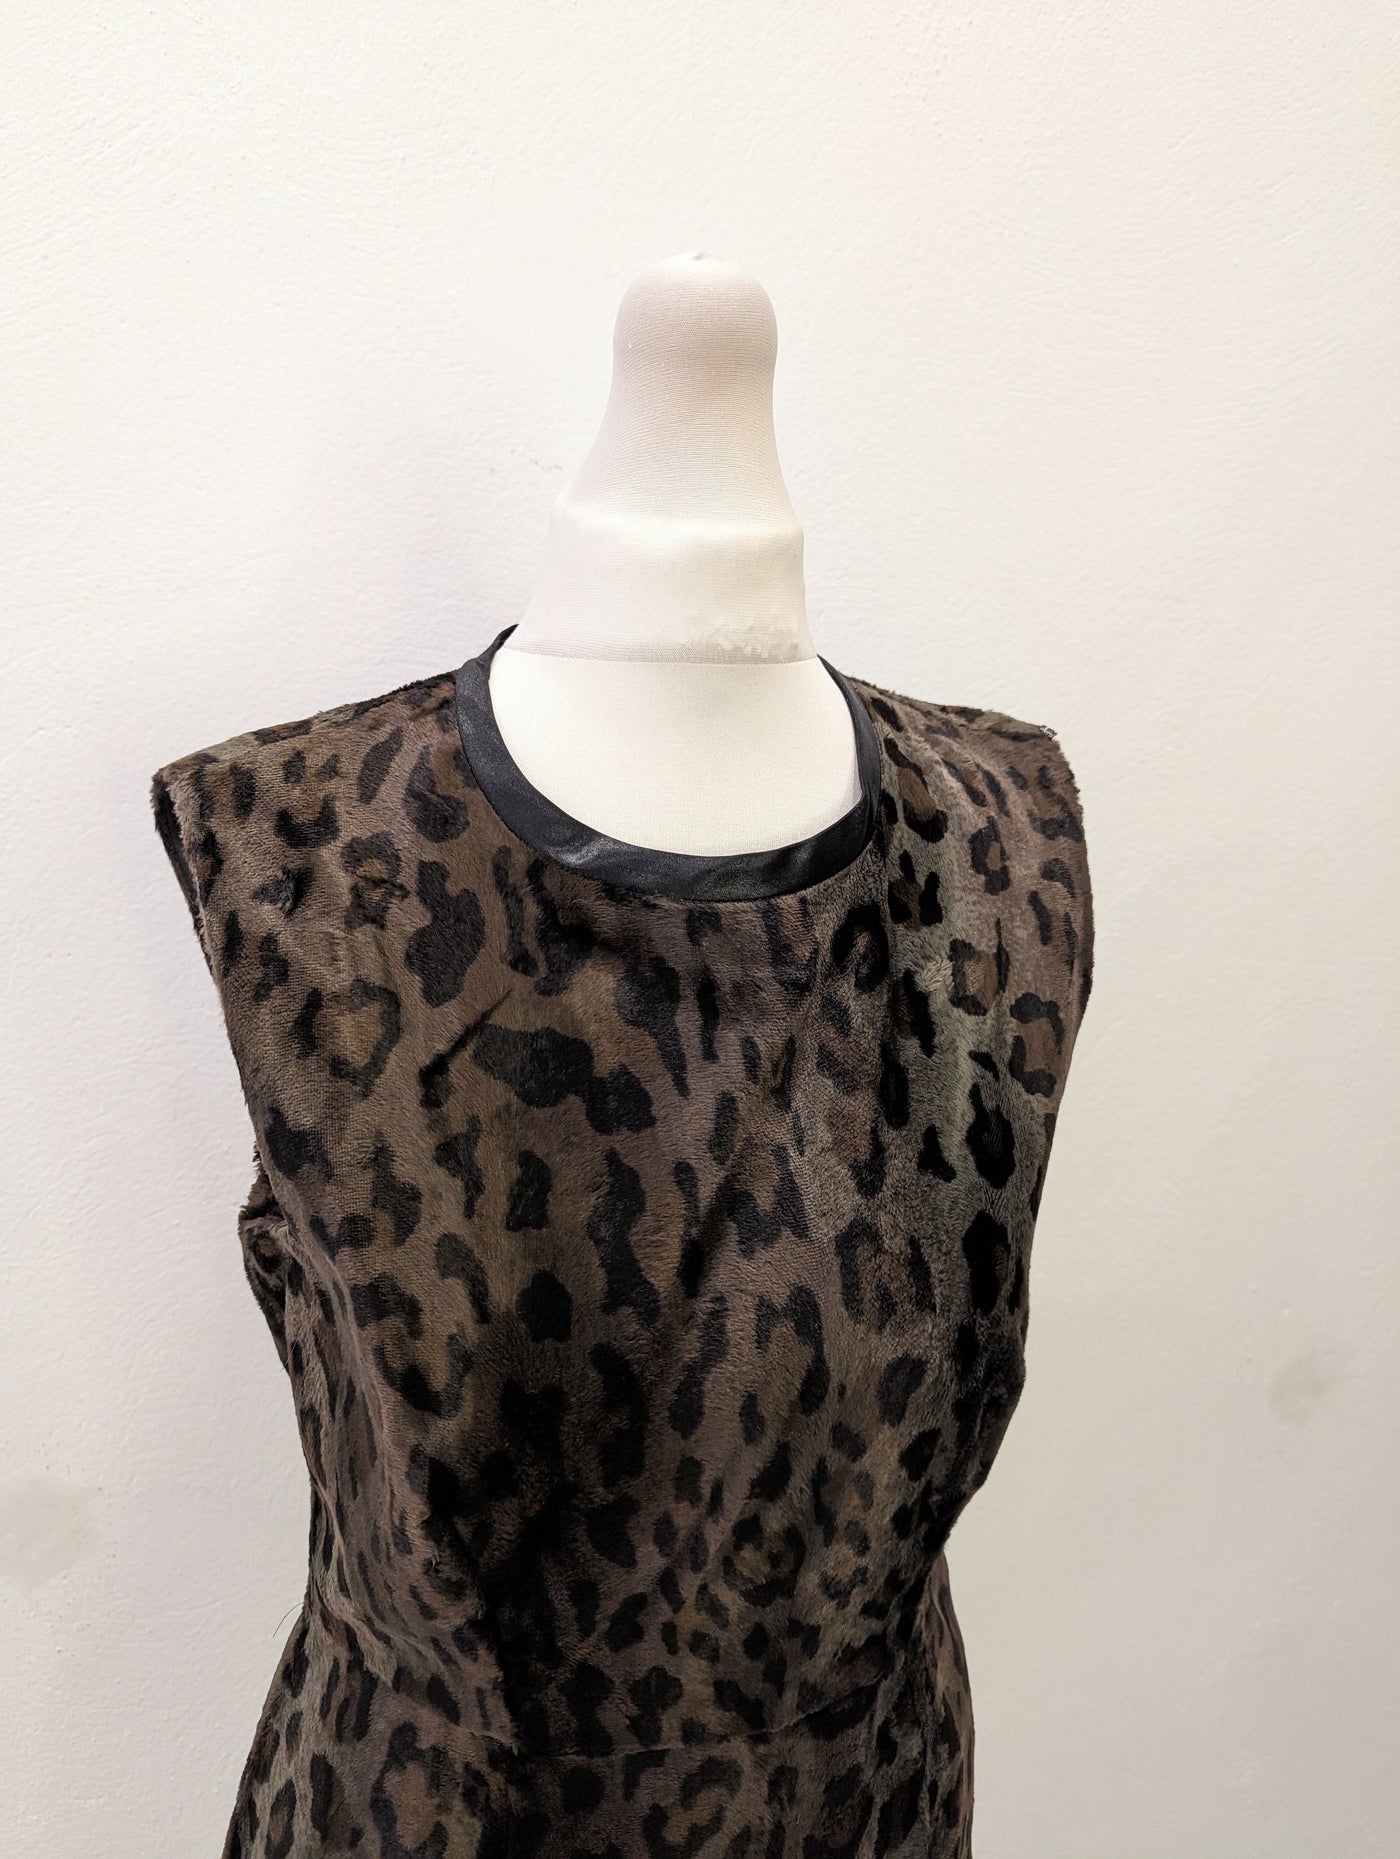 Sportmax Leopard Faux Fur dress 6/8